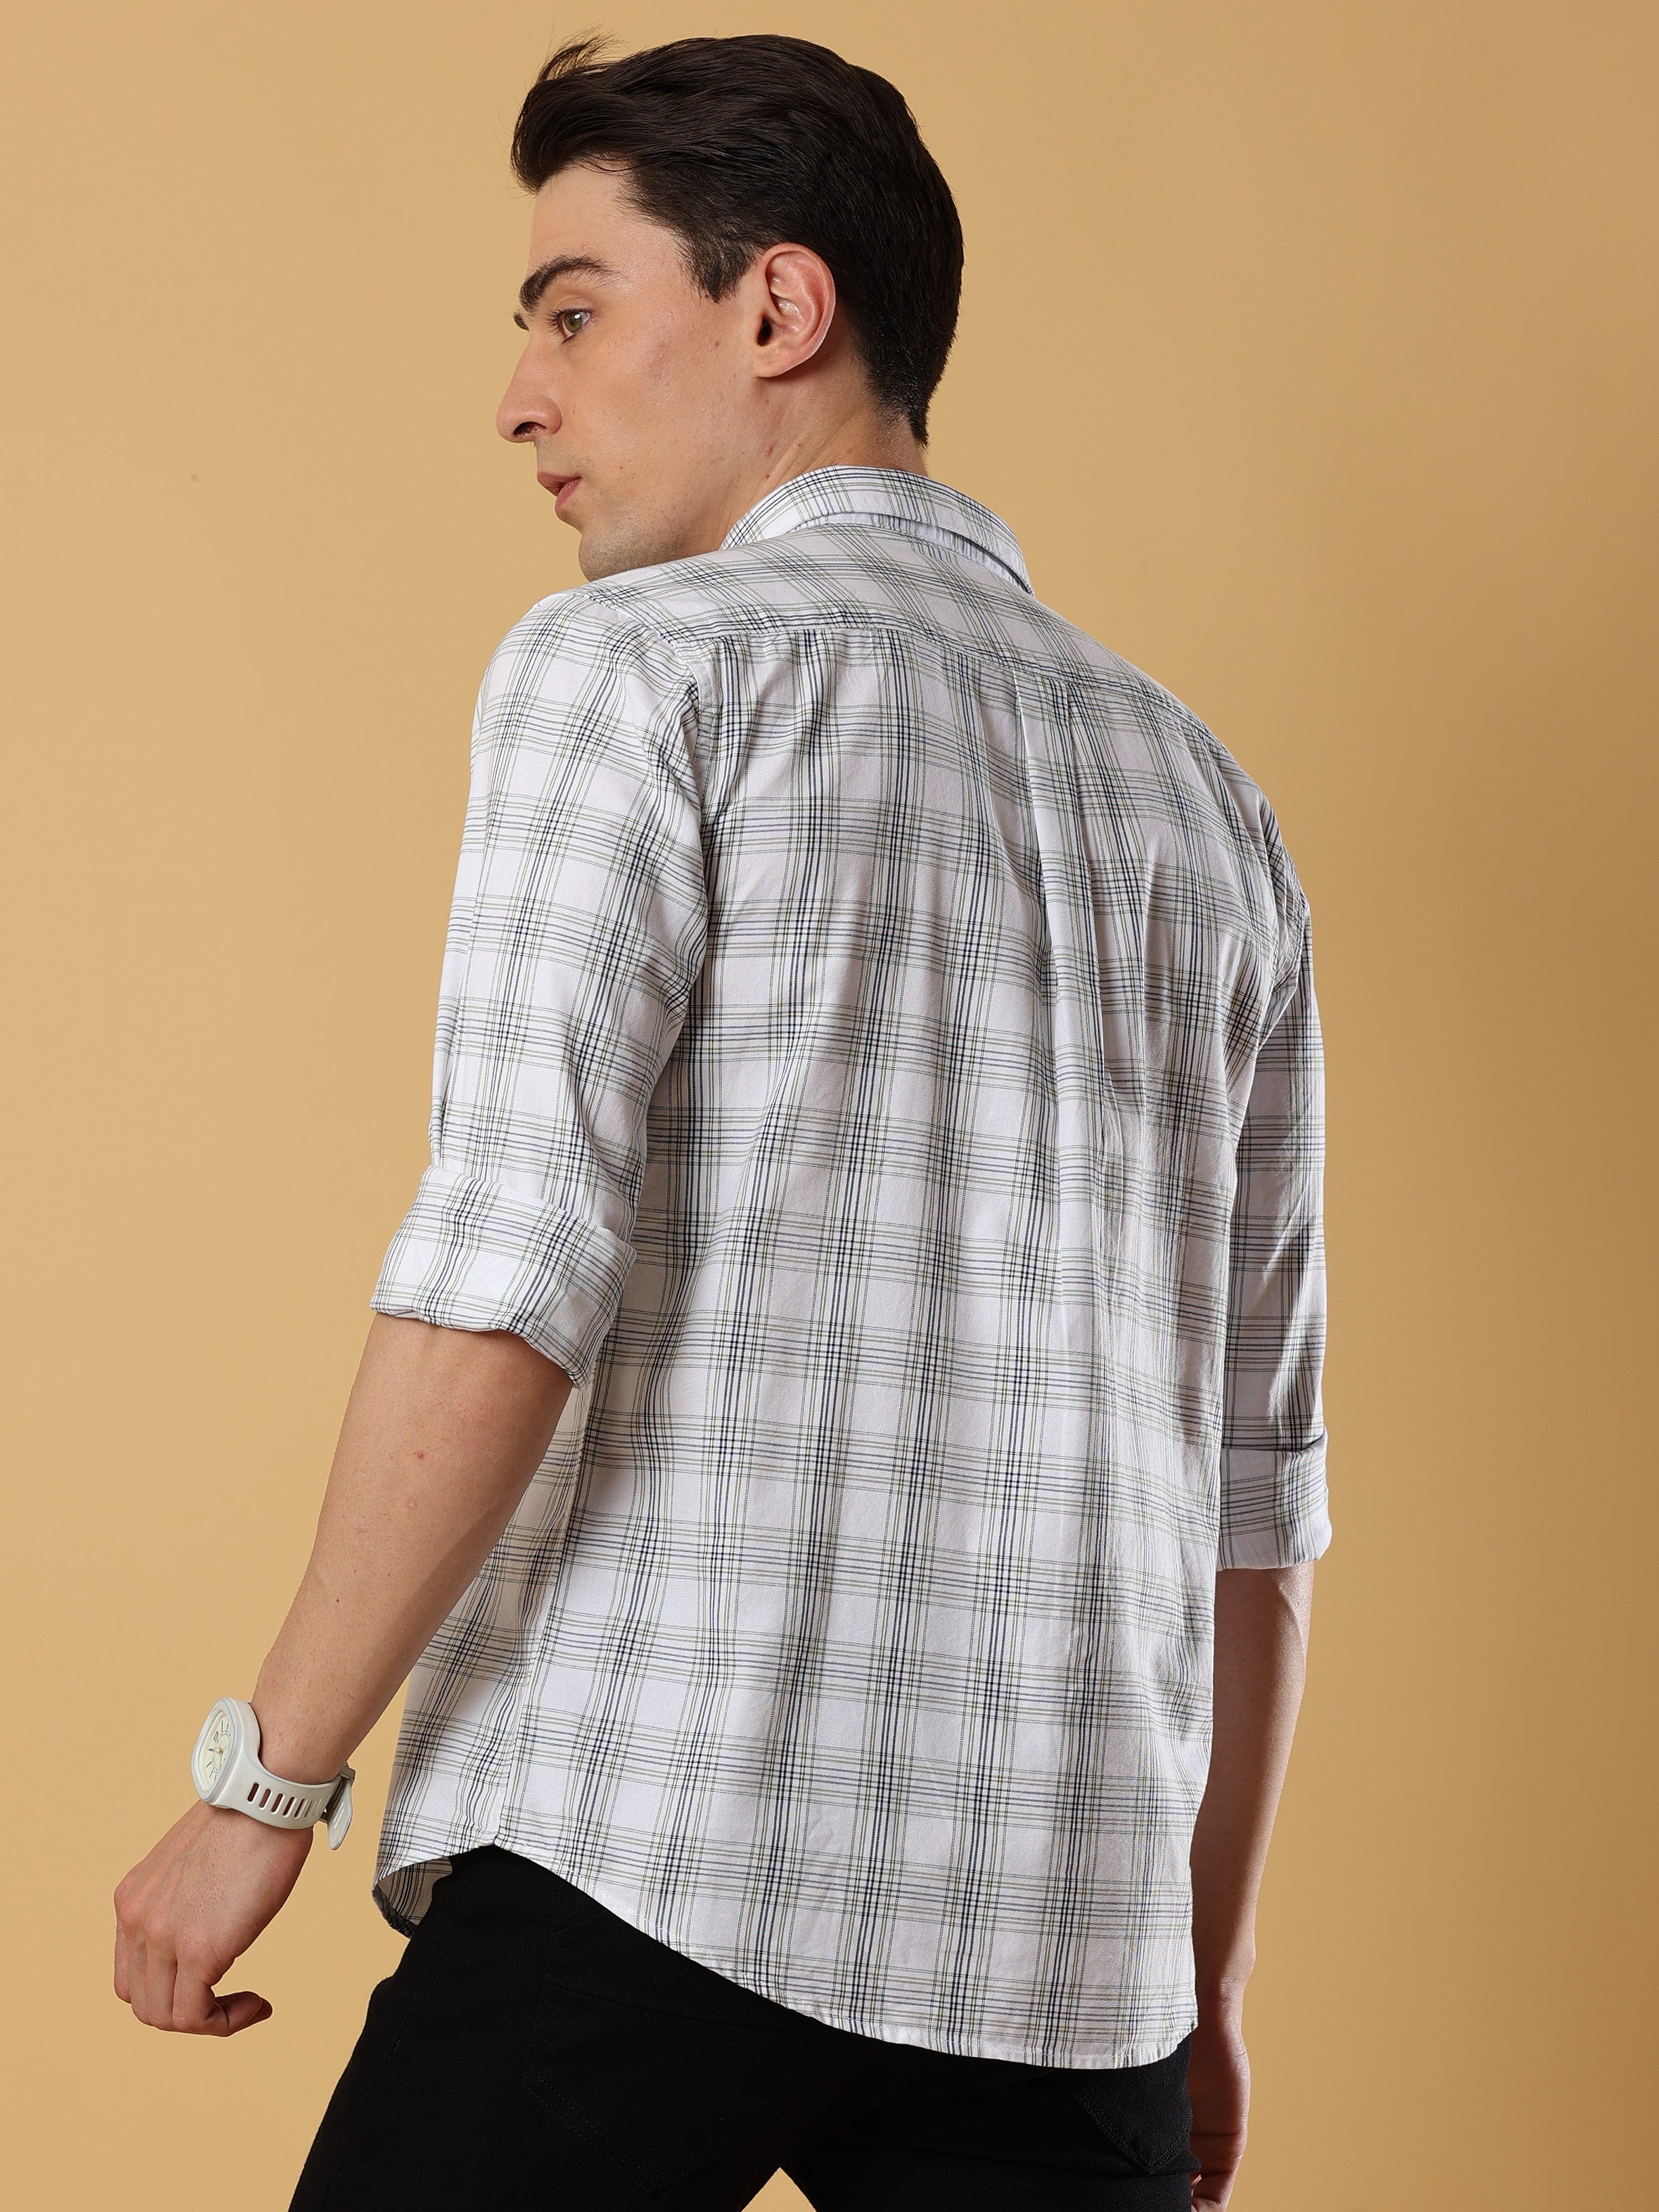 Premium Trendy Checks Shirt | Checked Shirt Mens OutfitRs. 1199.00